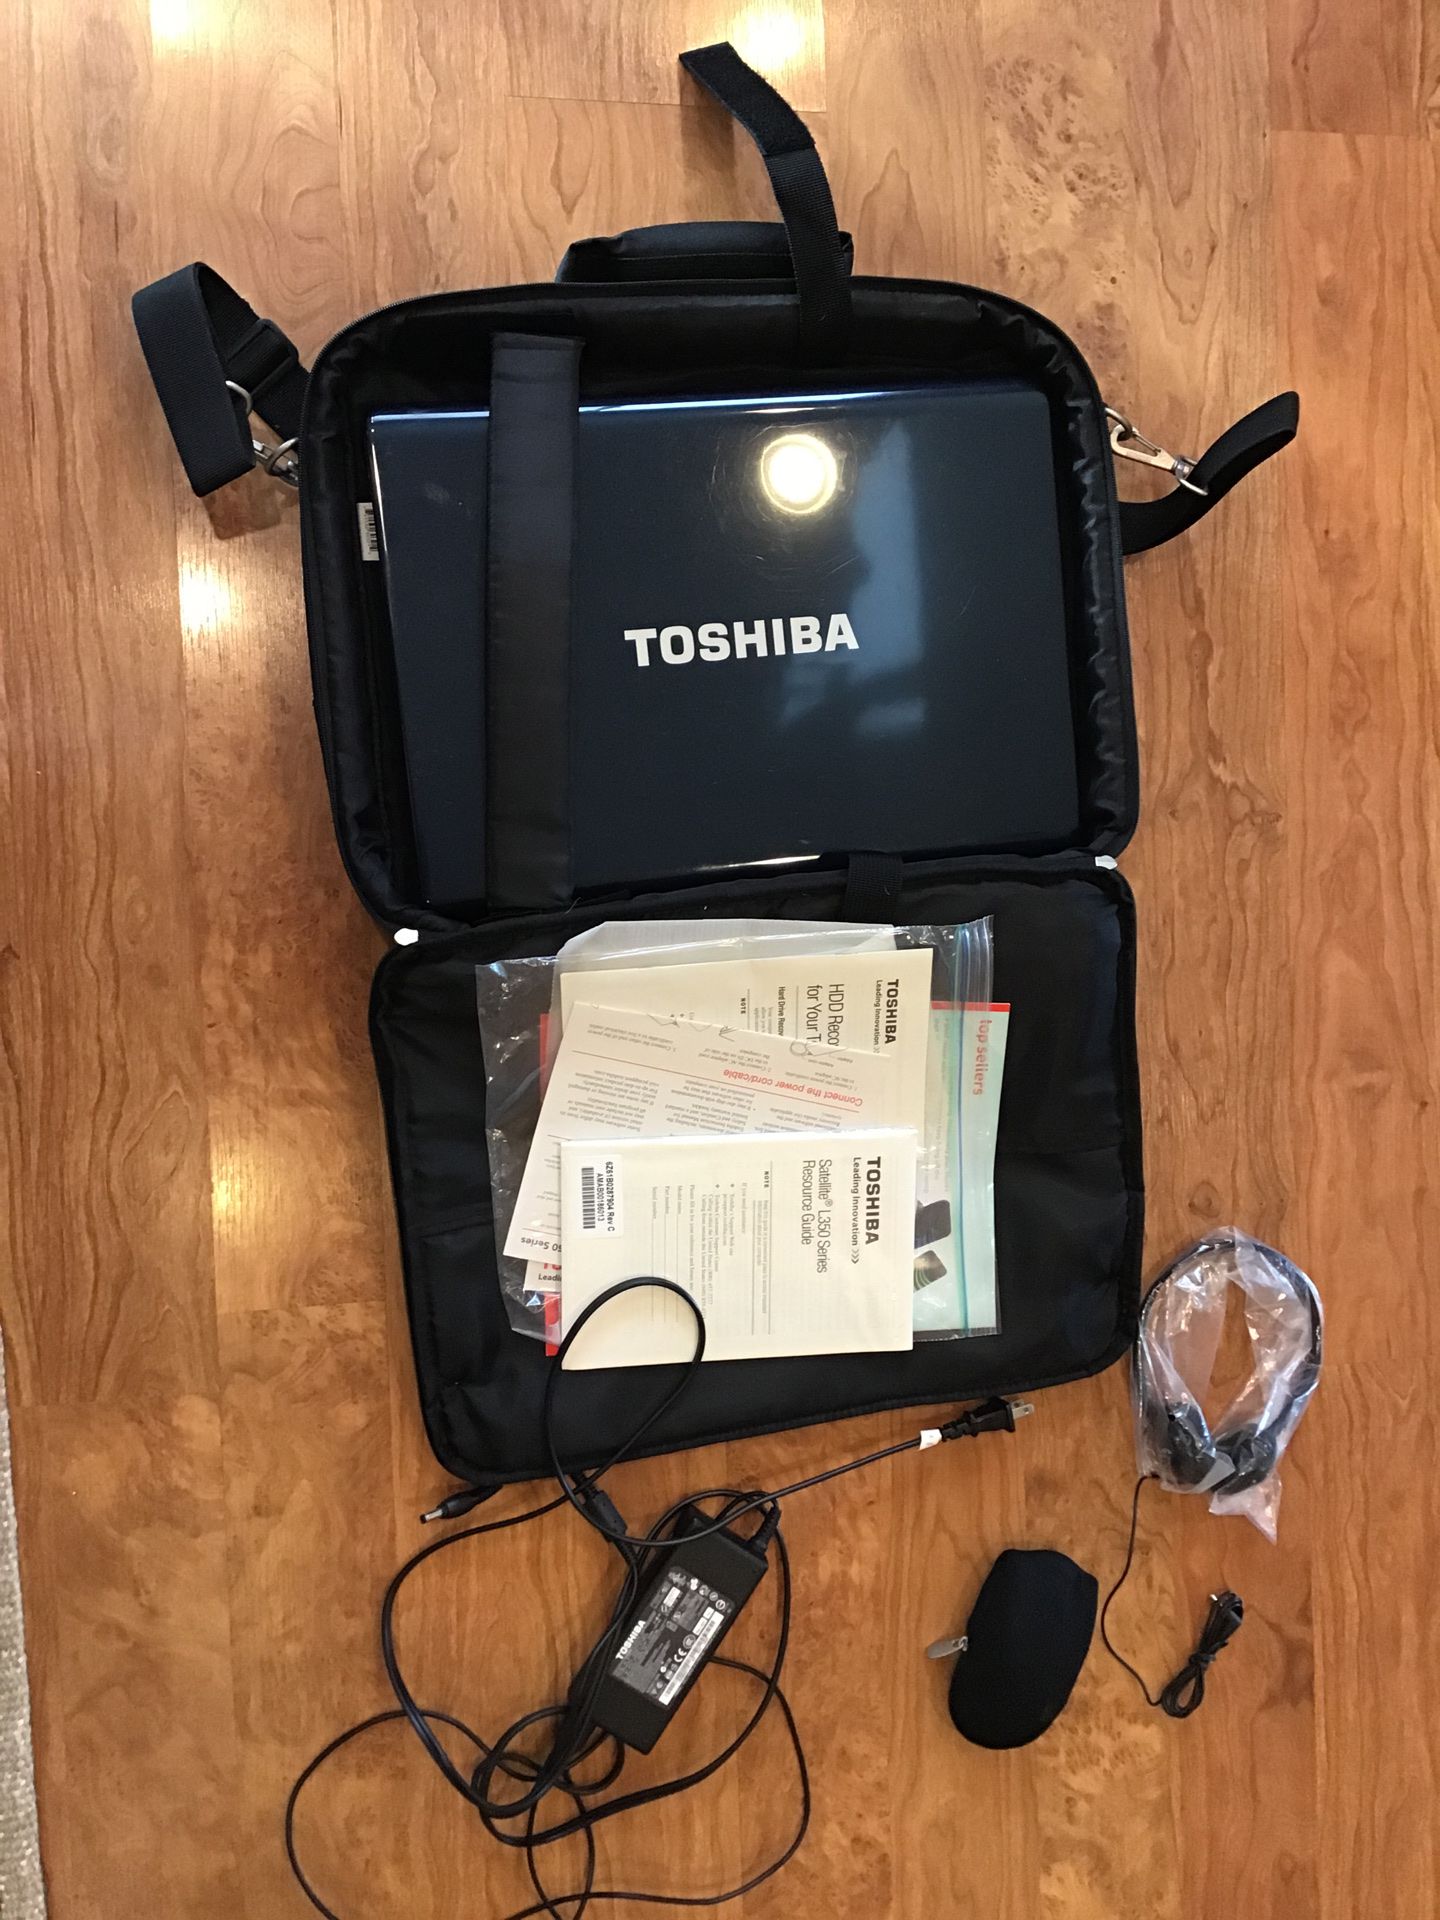 Toshiba laptop, case, mouse, headphones